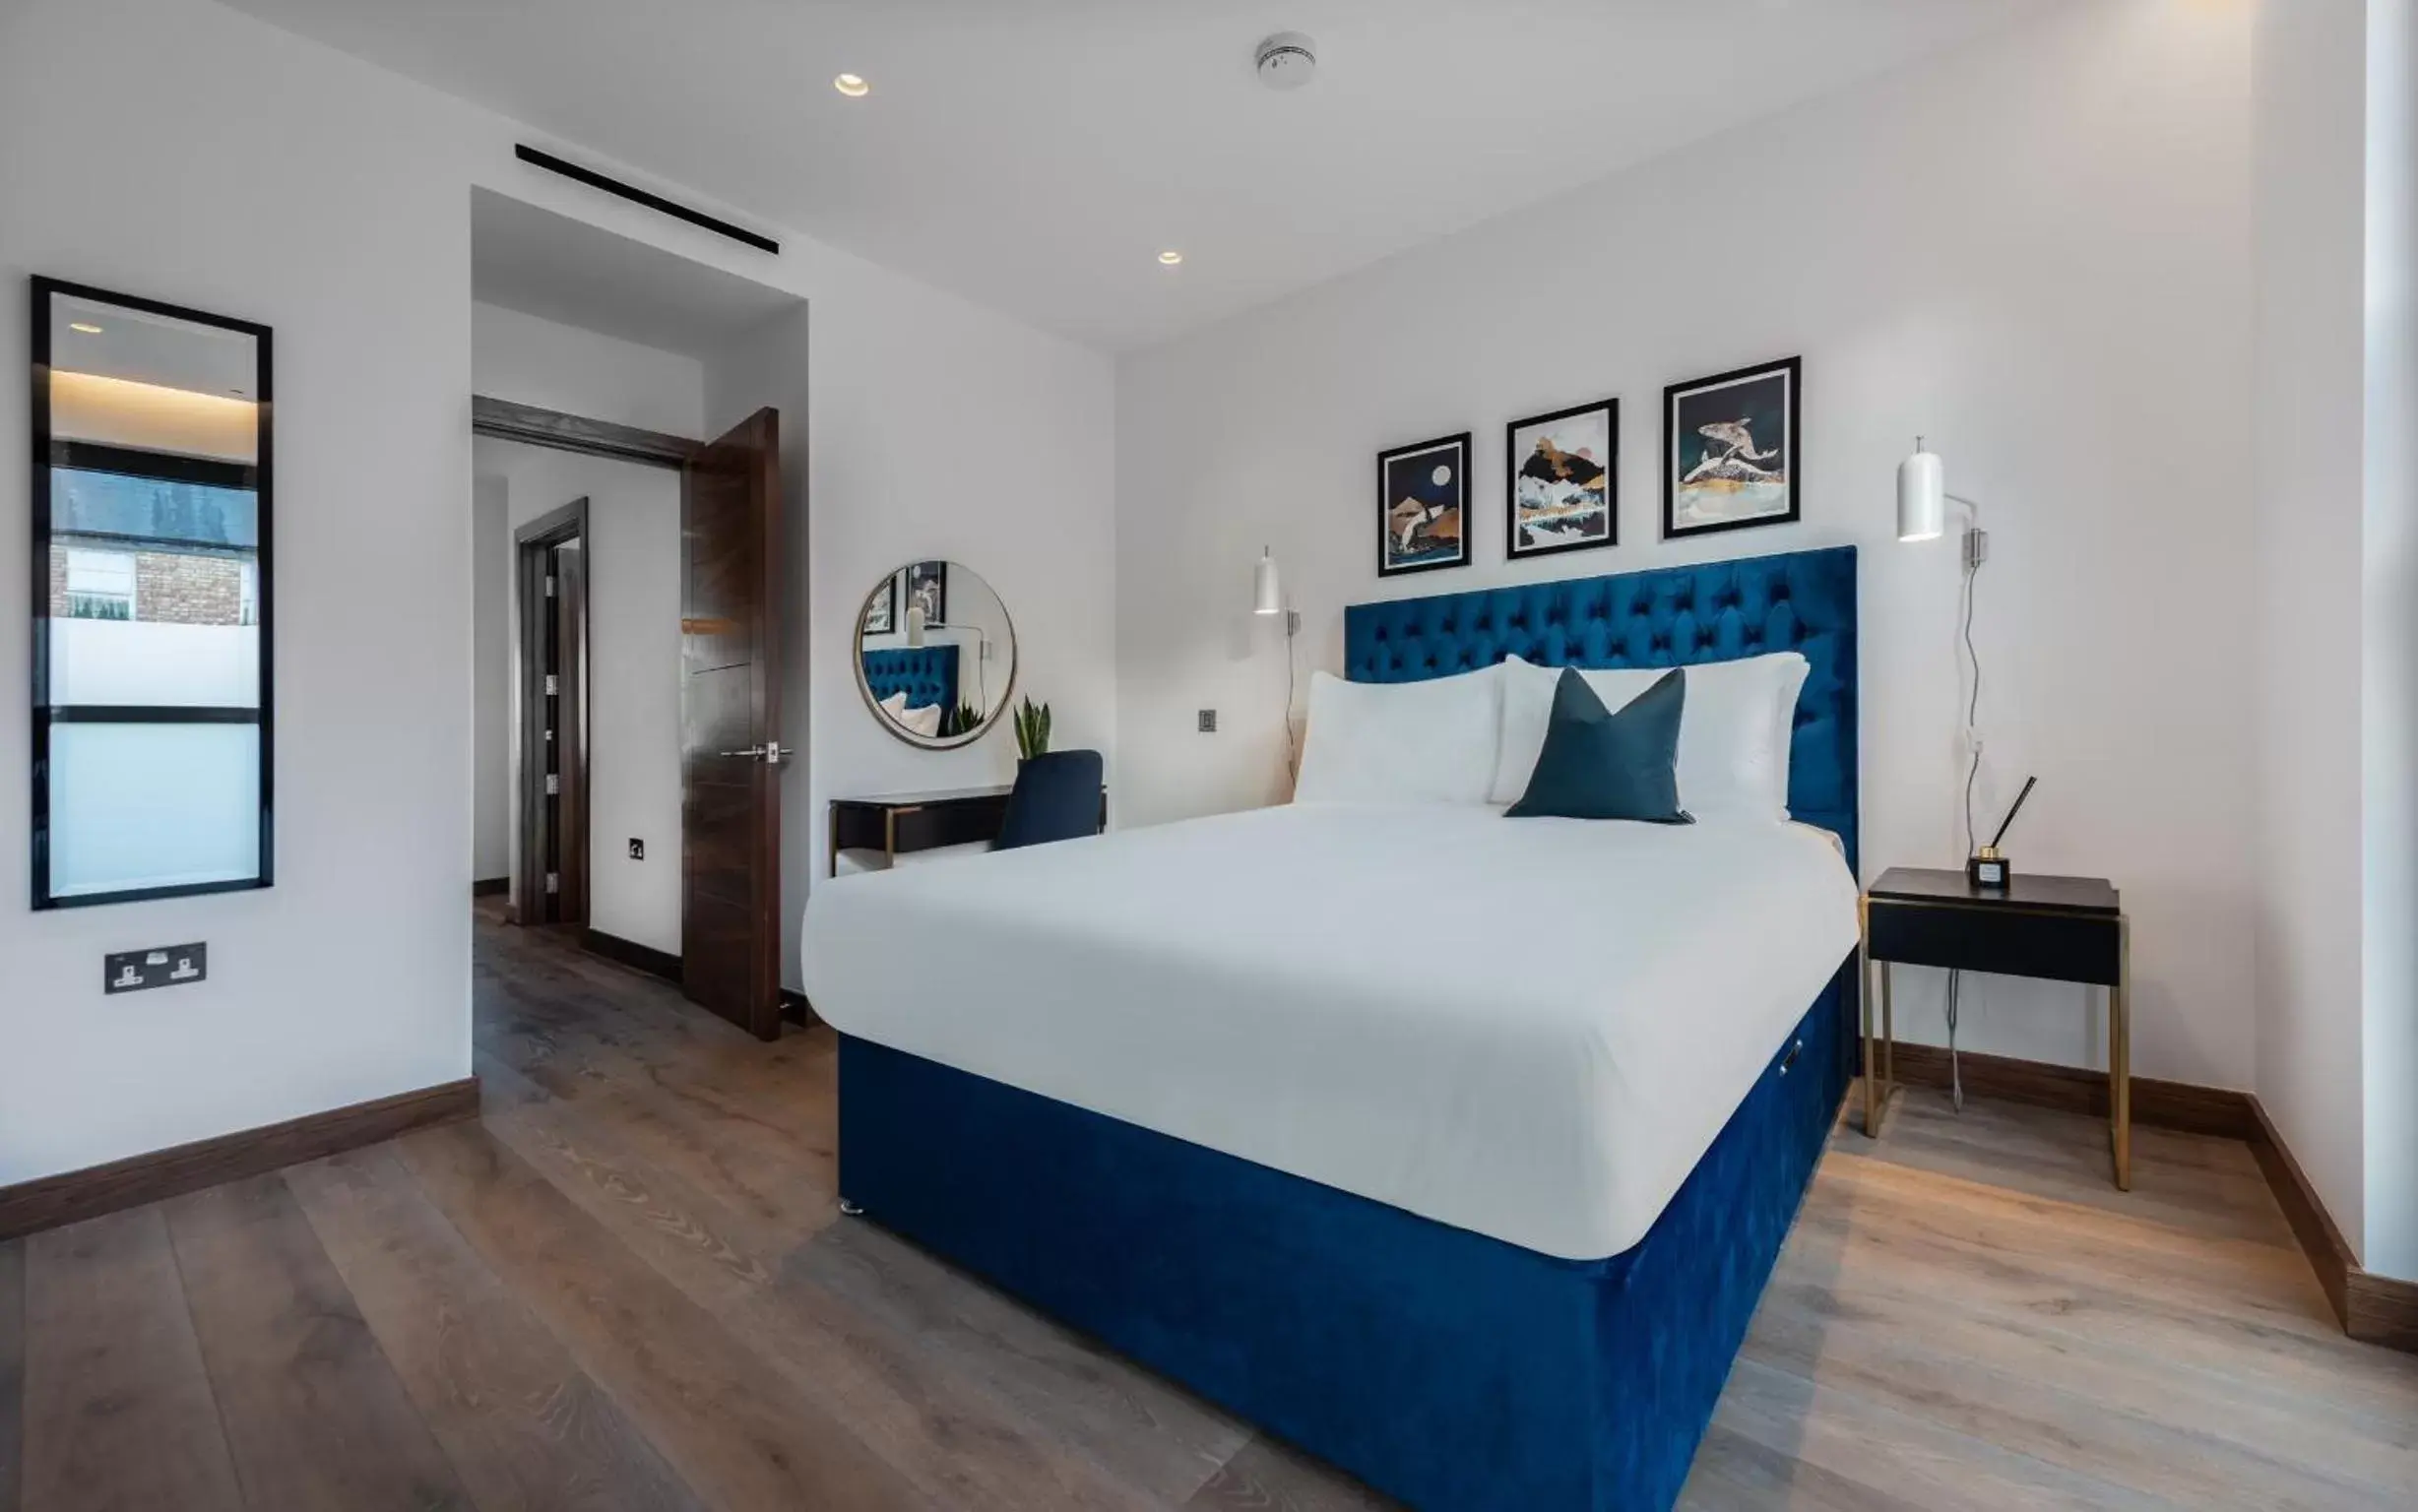 Bedroom, Bed in Hux Hotel, Kensington